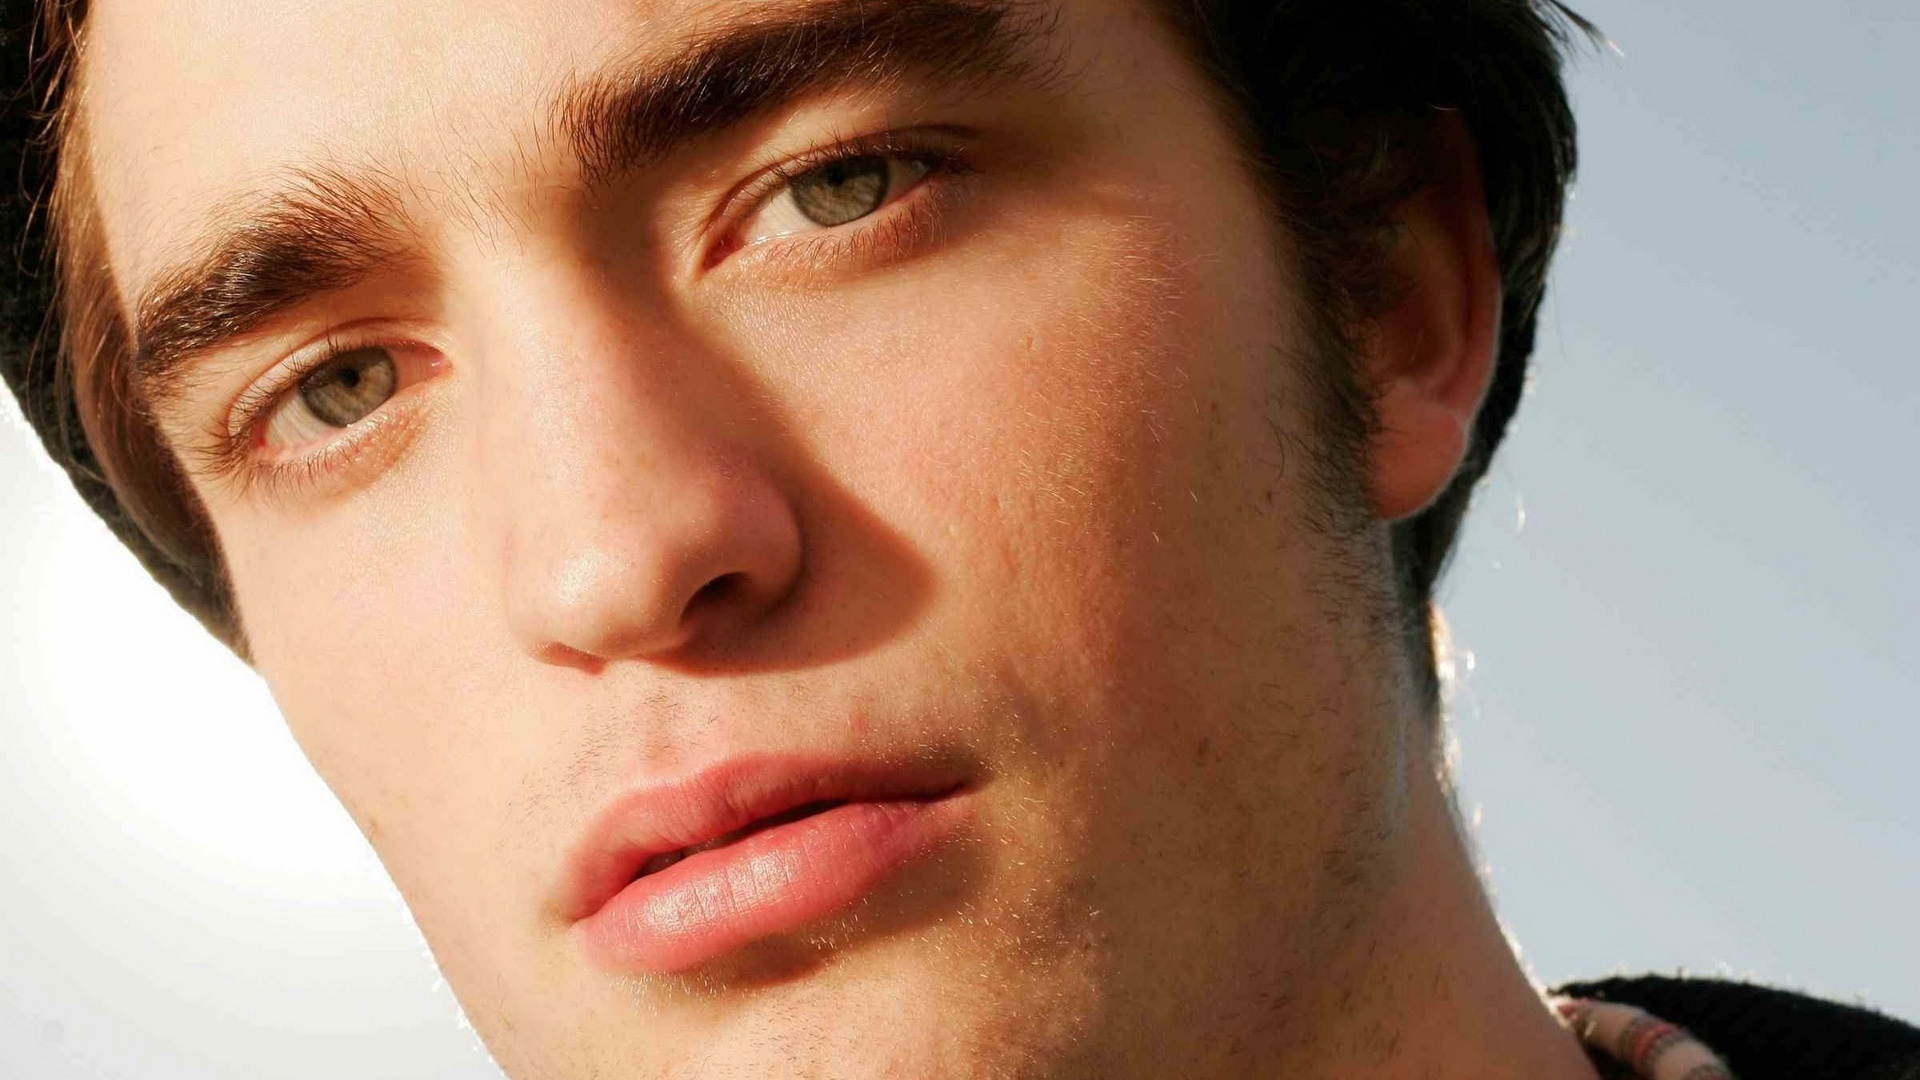 Robert Pattinson Close-up for 1920 x 1080 HDTV 1080p resolution